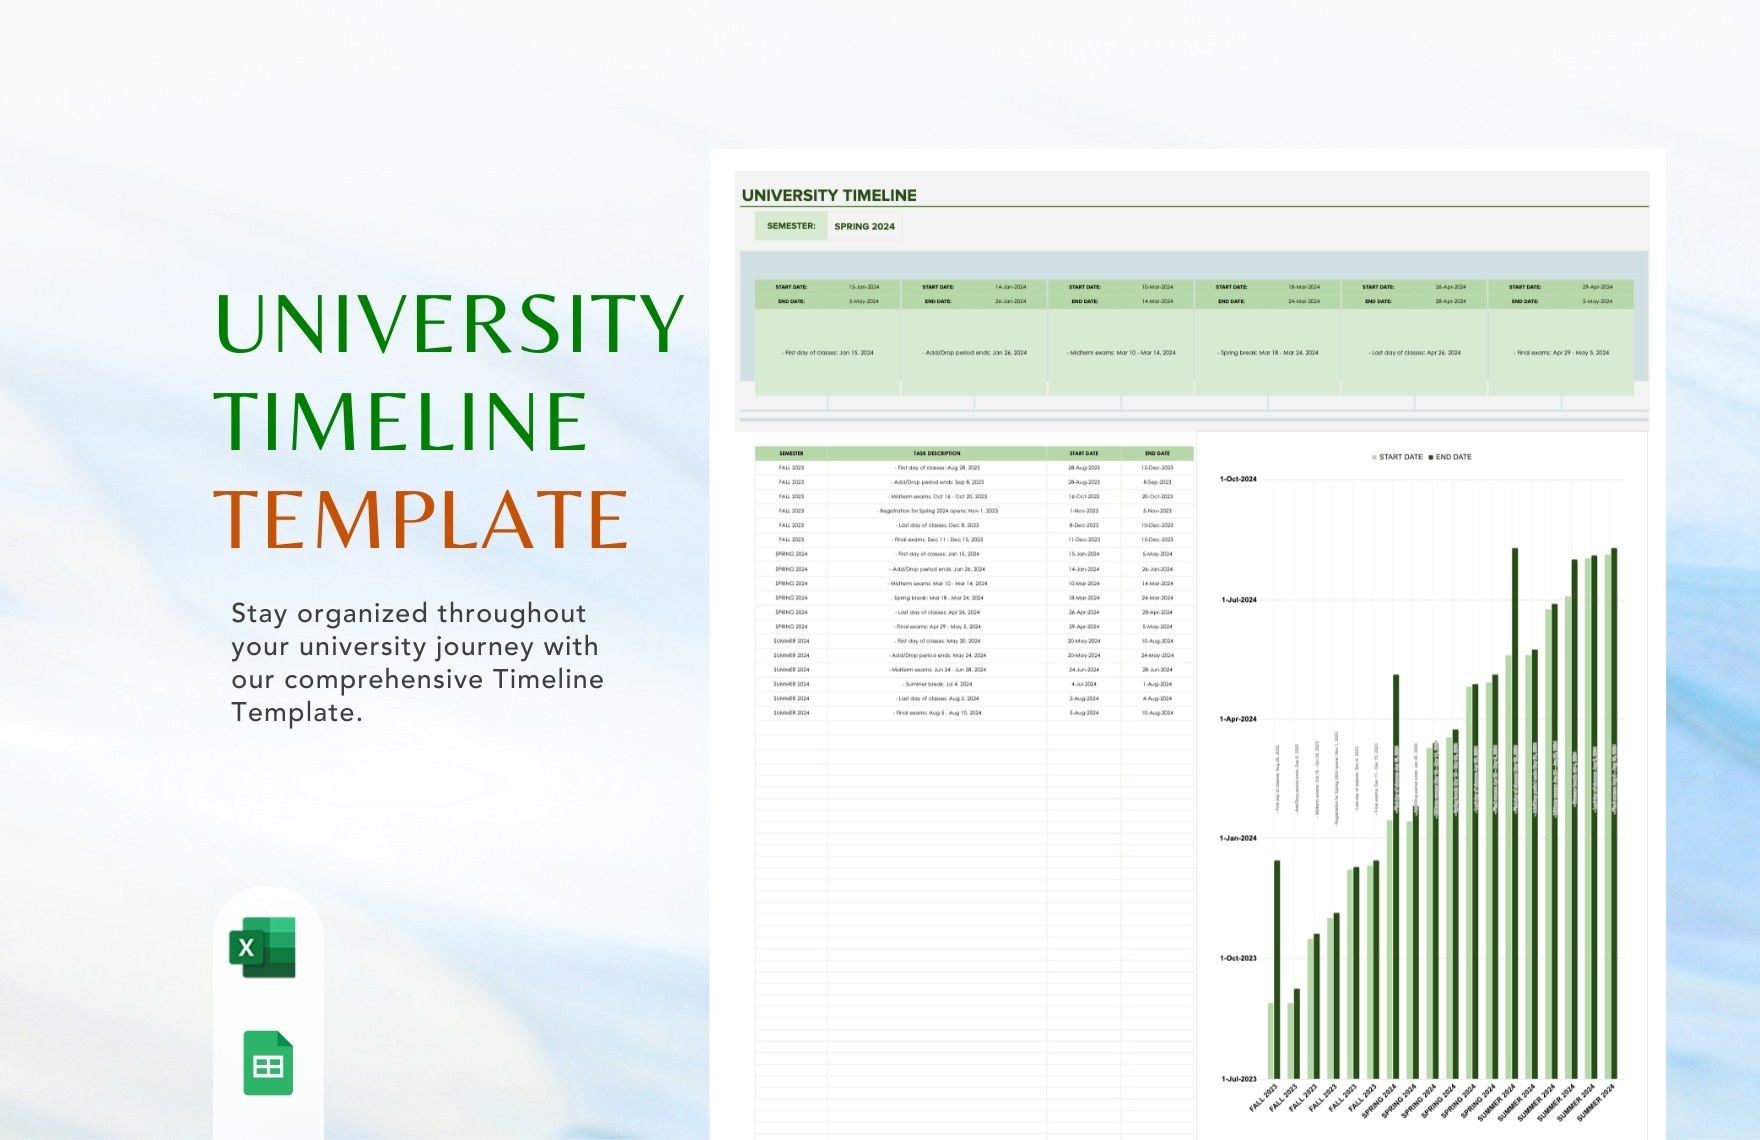 University Timeline Template in Excel, Google Sheets